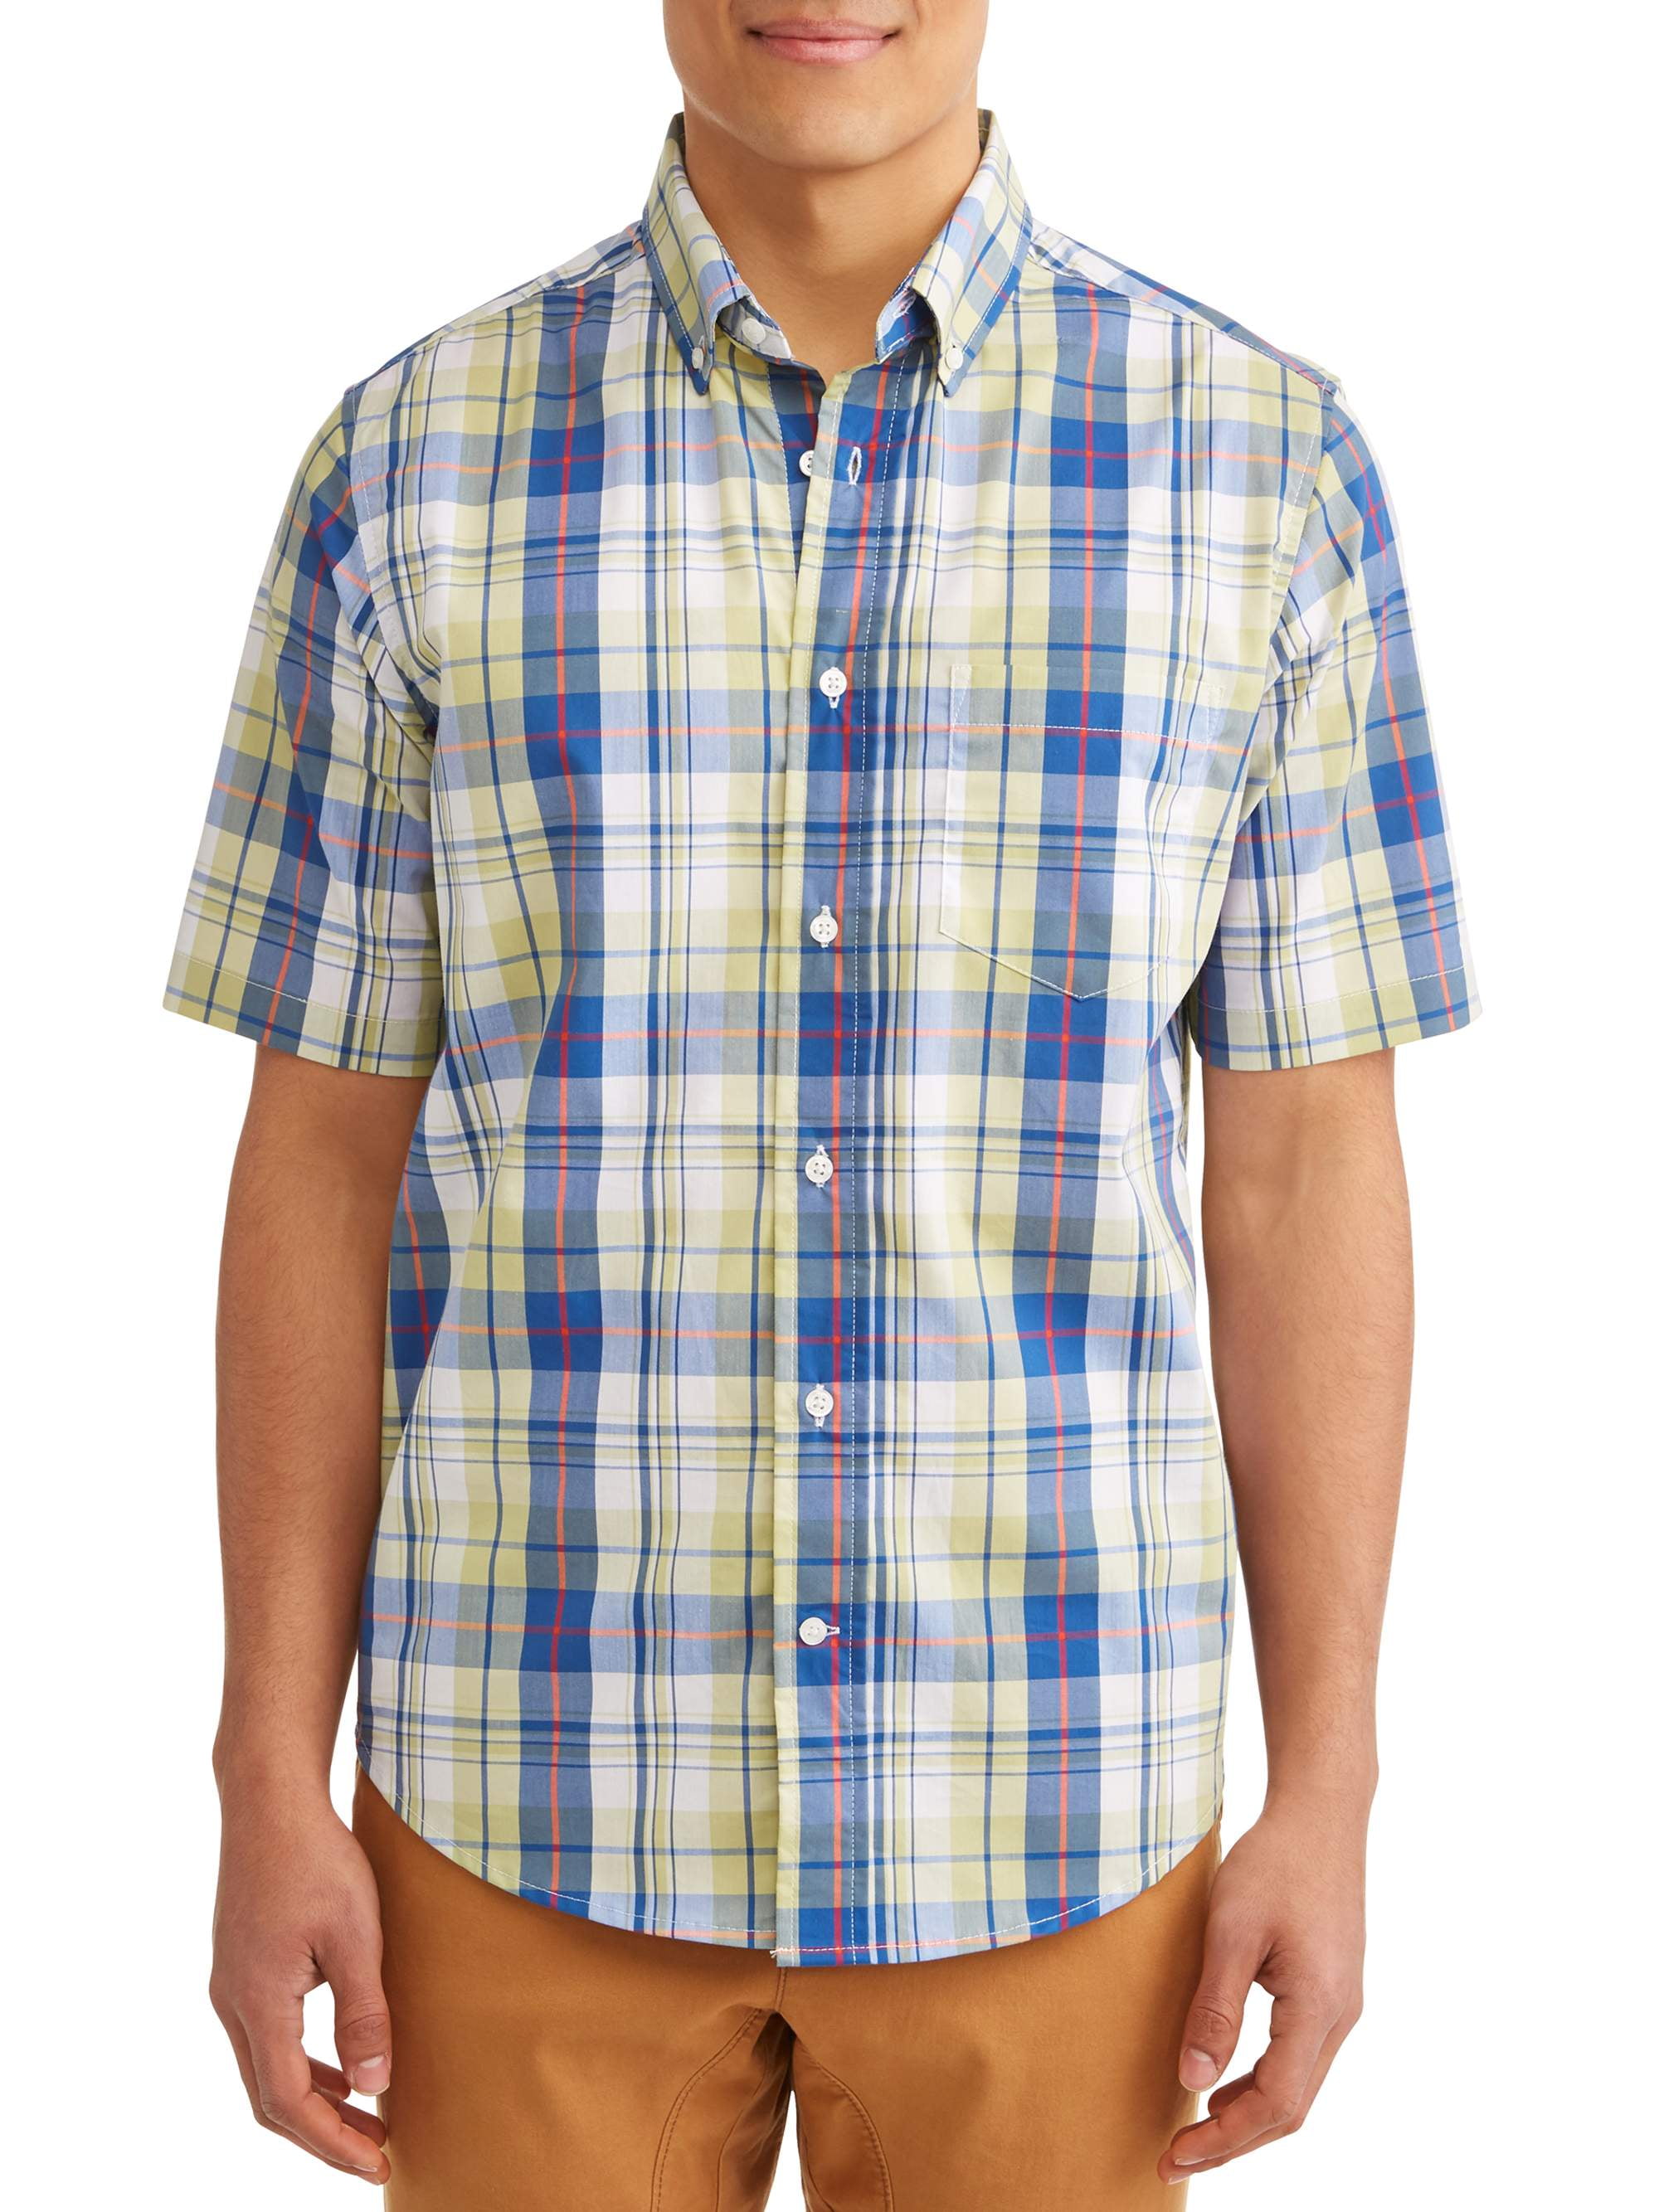 George Poplin Short Sleeve Shirt Up to 5XL - Walmart.com